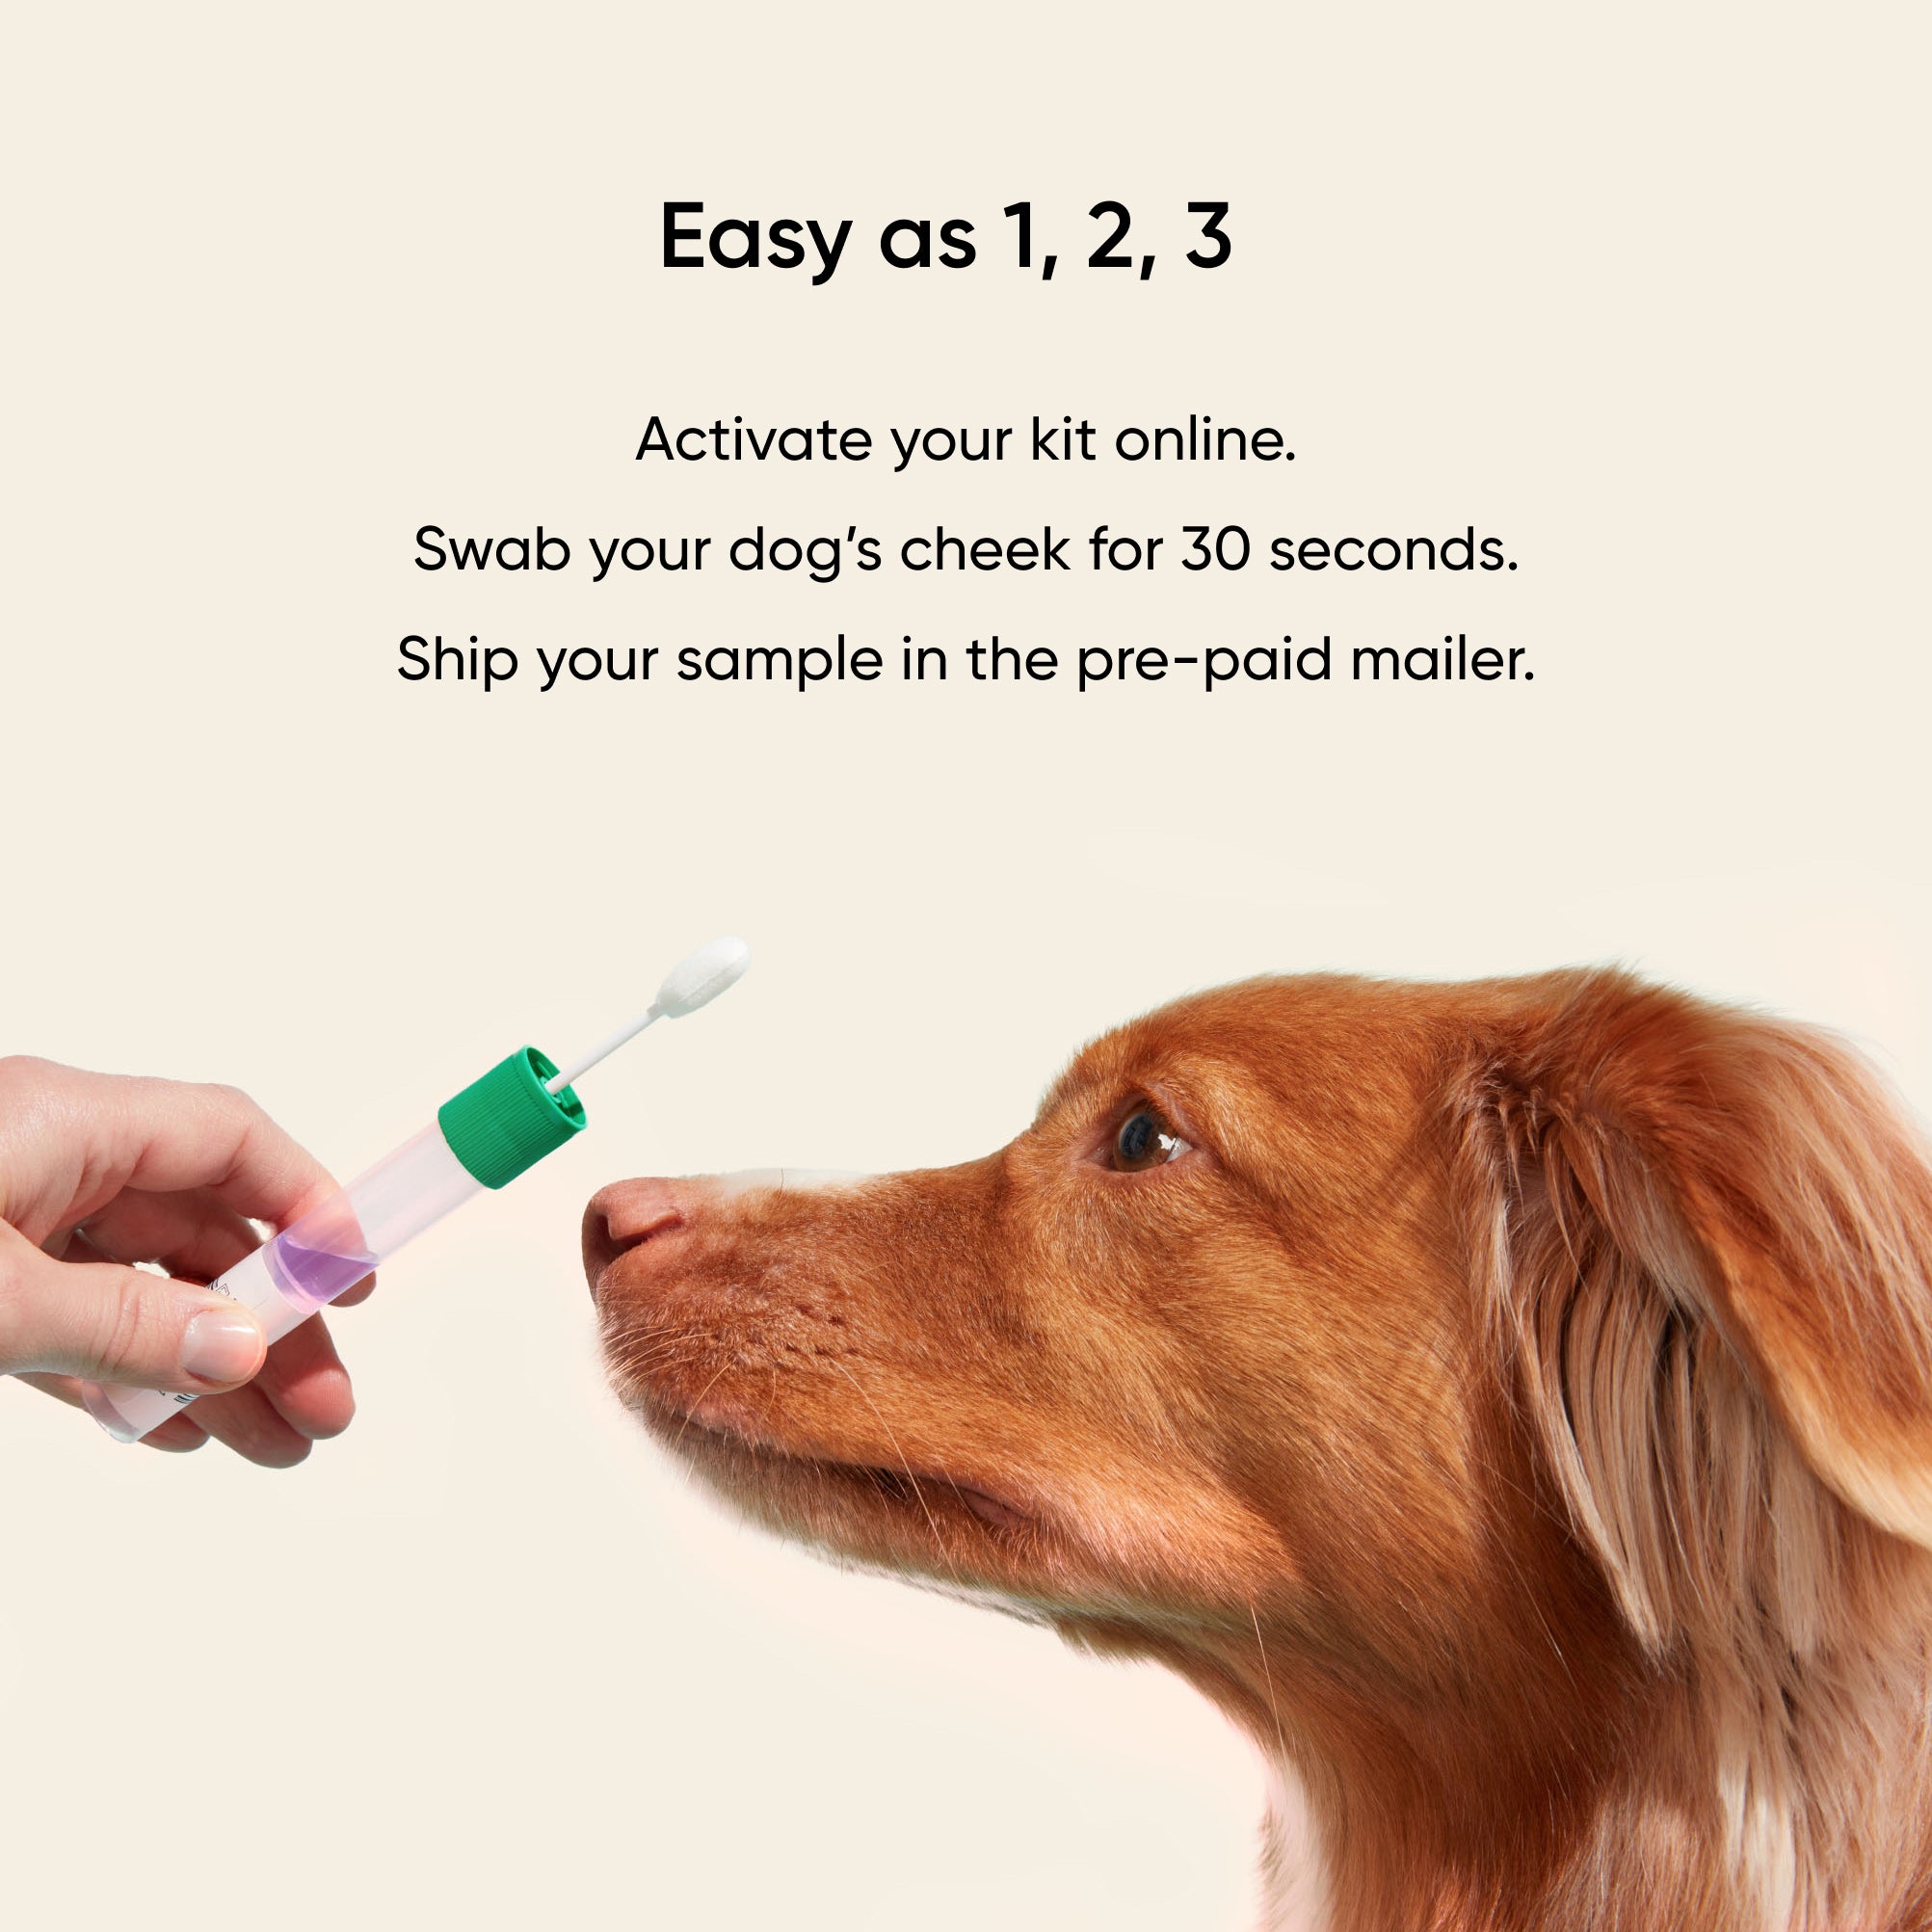 Shop Embark Dog DNA Tests, Probiotics & Health Supplements